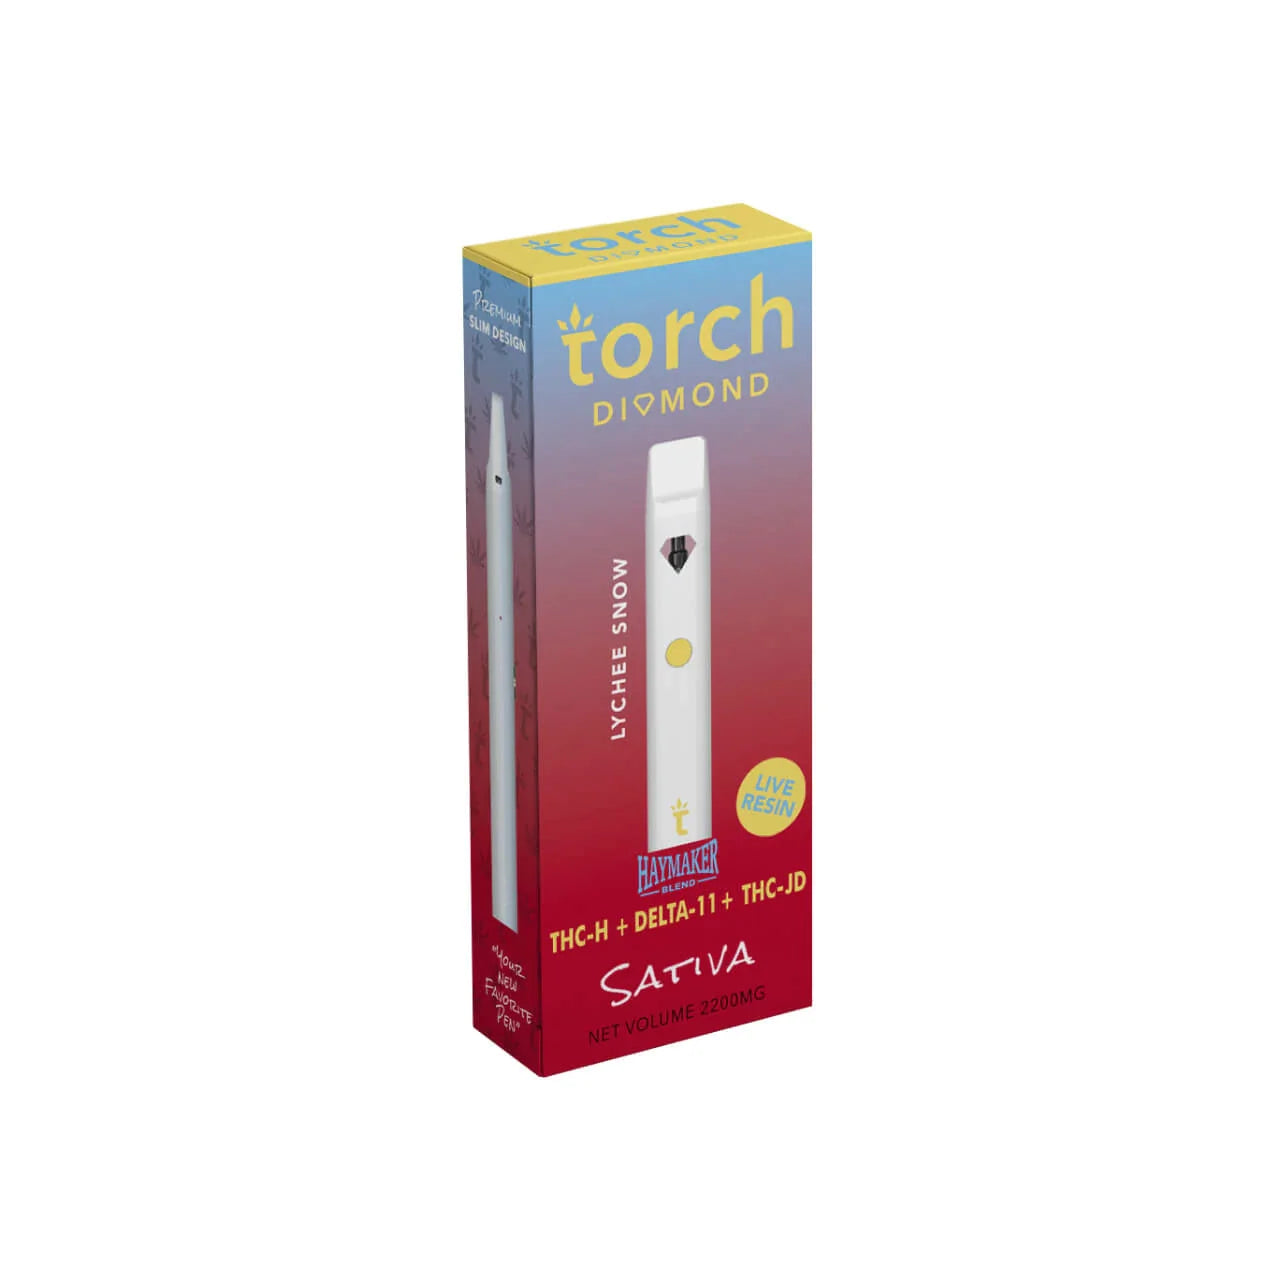 Torch Diamond Lychee Snow THC-h + Delta 11 + THC-jd Disposable (2.2g) Best Price